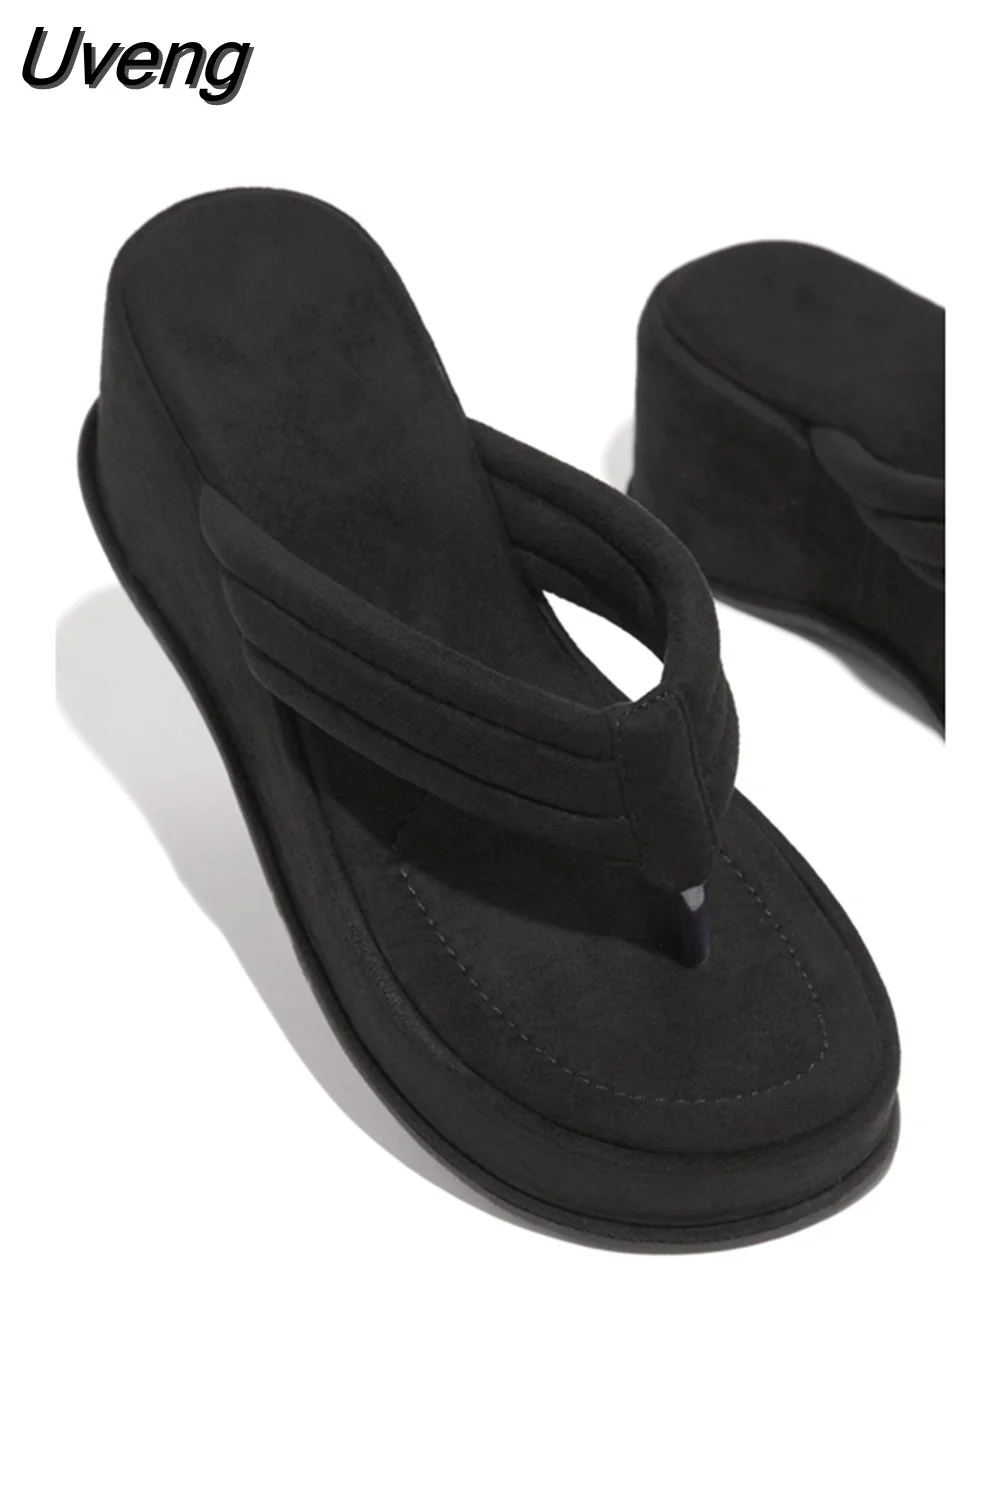 Uveng Wedges Sandals Summer Solid Color Casual Clip Toe Flip Flops Women Platform Slipper Beach Sandals Light Comfort Shoes 2023 508-0